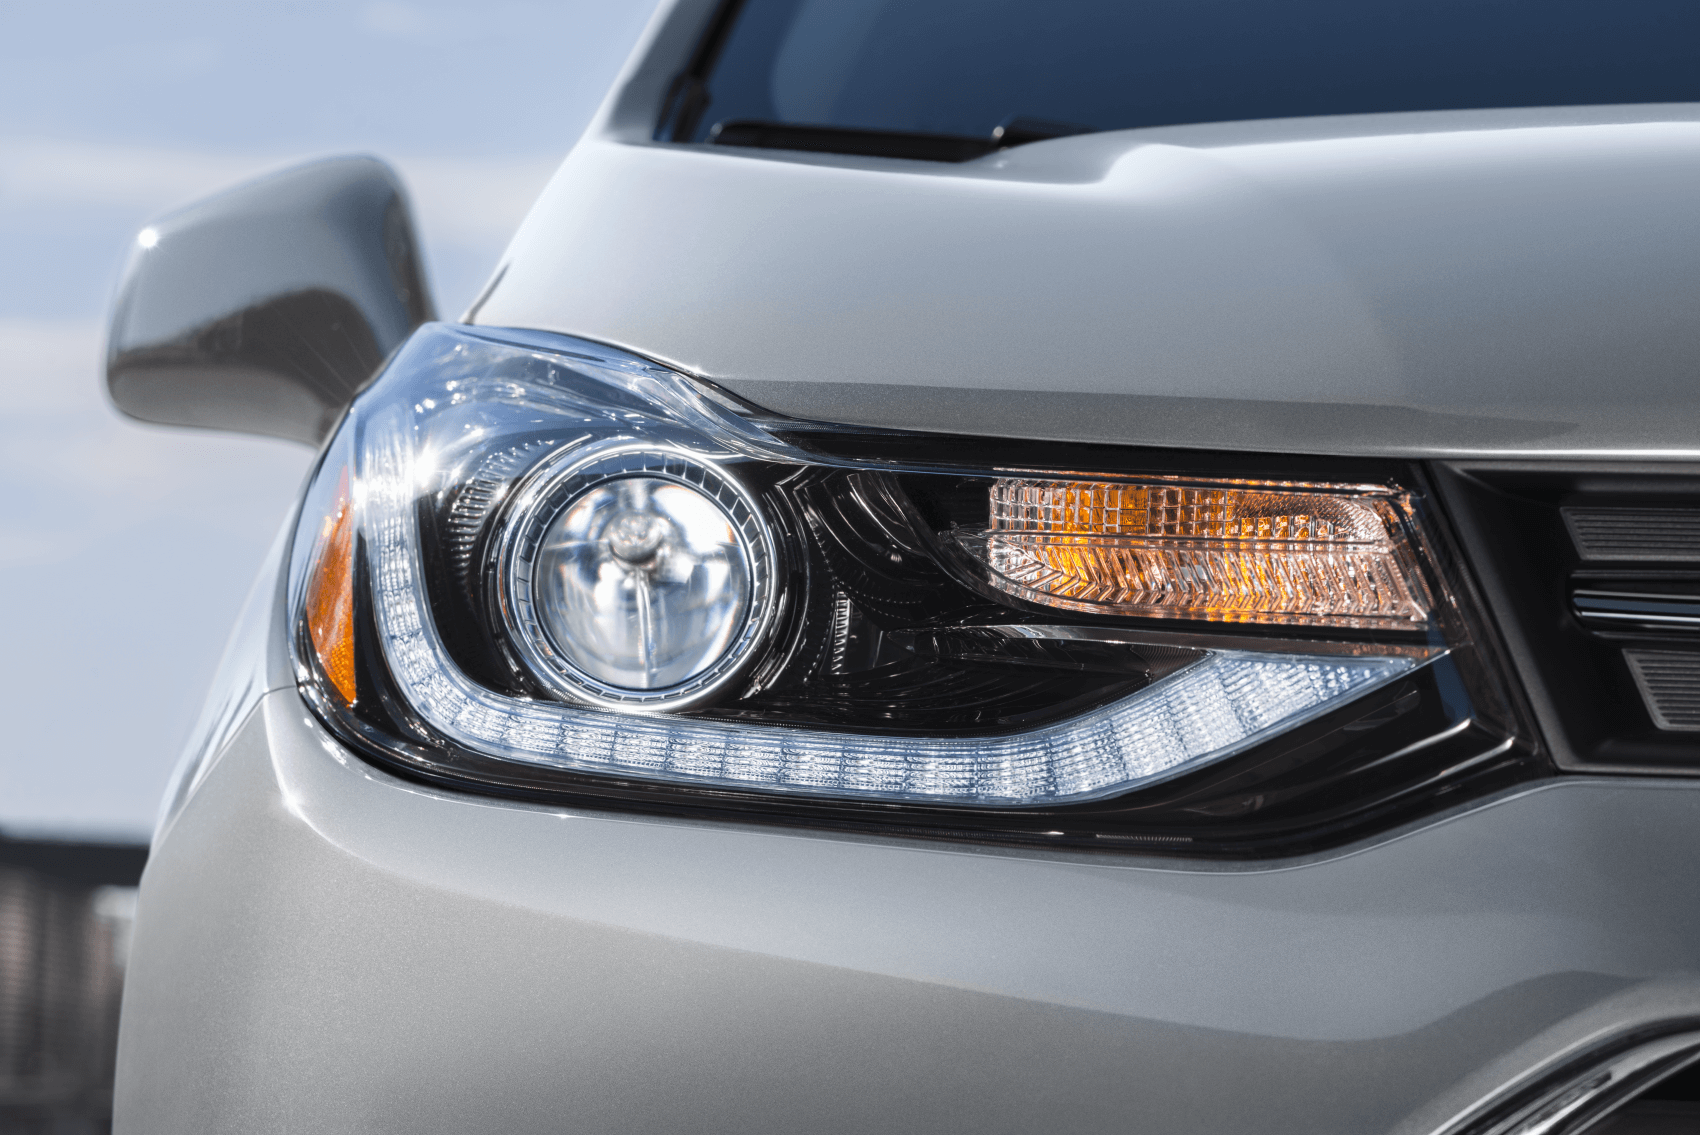 2021 Chevy Trax LED Daytime Running Lights